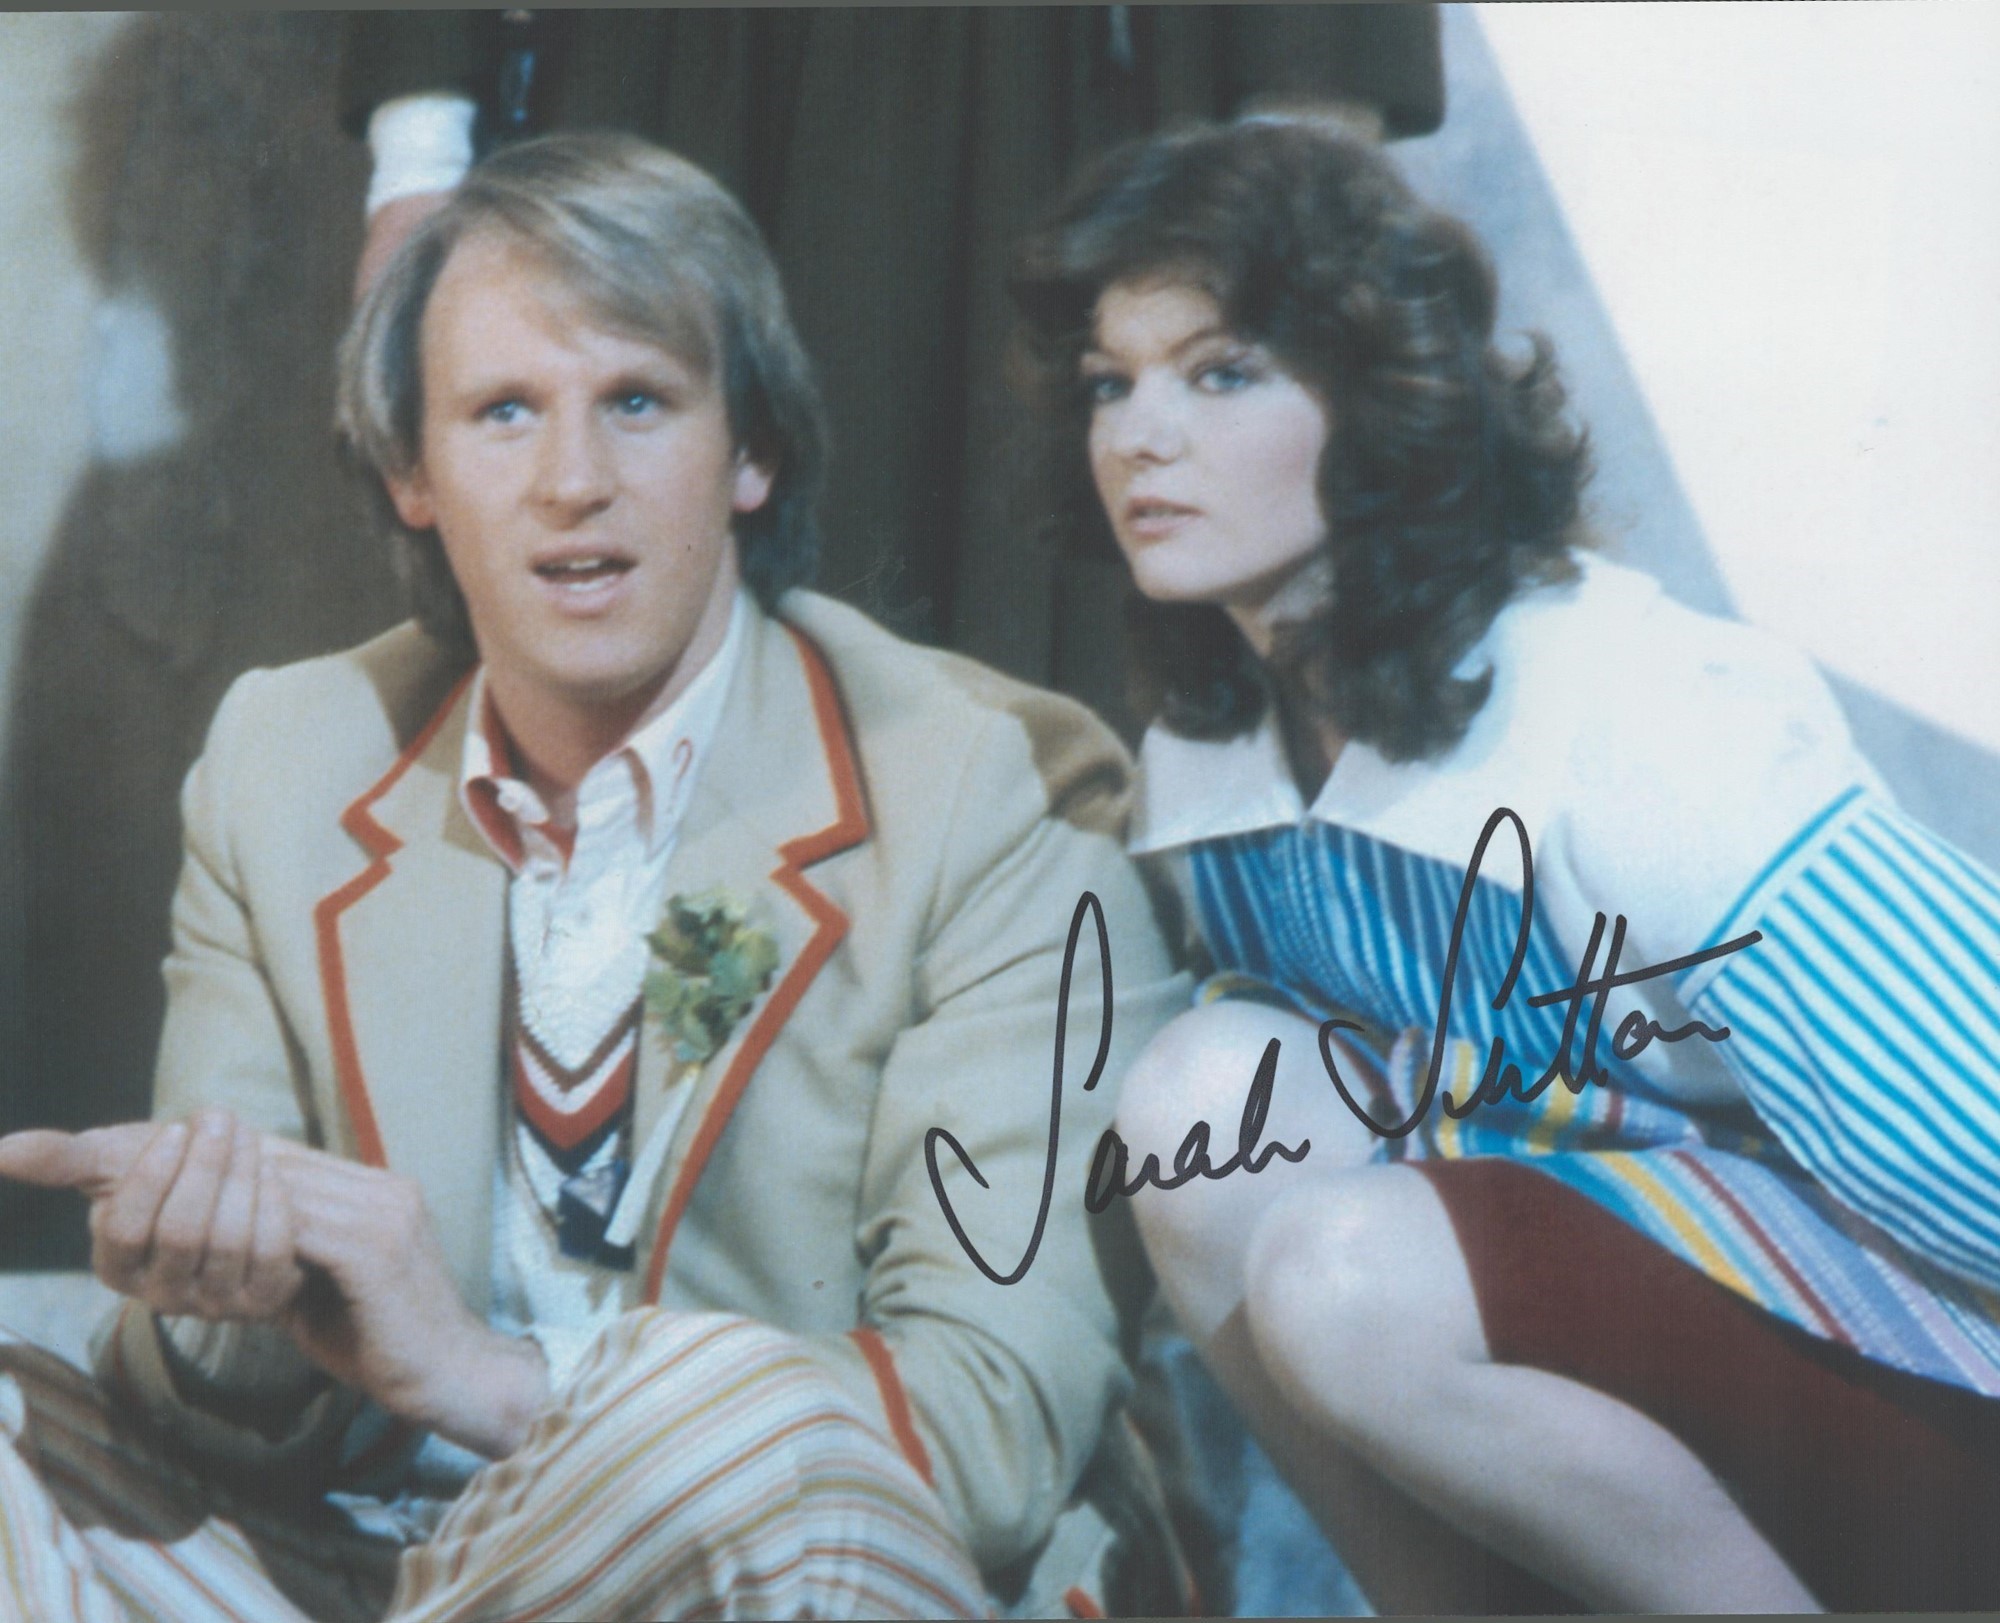 Doctor Who Actor, Sarah Sutton signed 10x8 colour photograph. Sutton (born 12 December 1961) is a